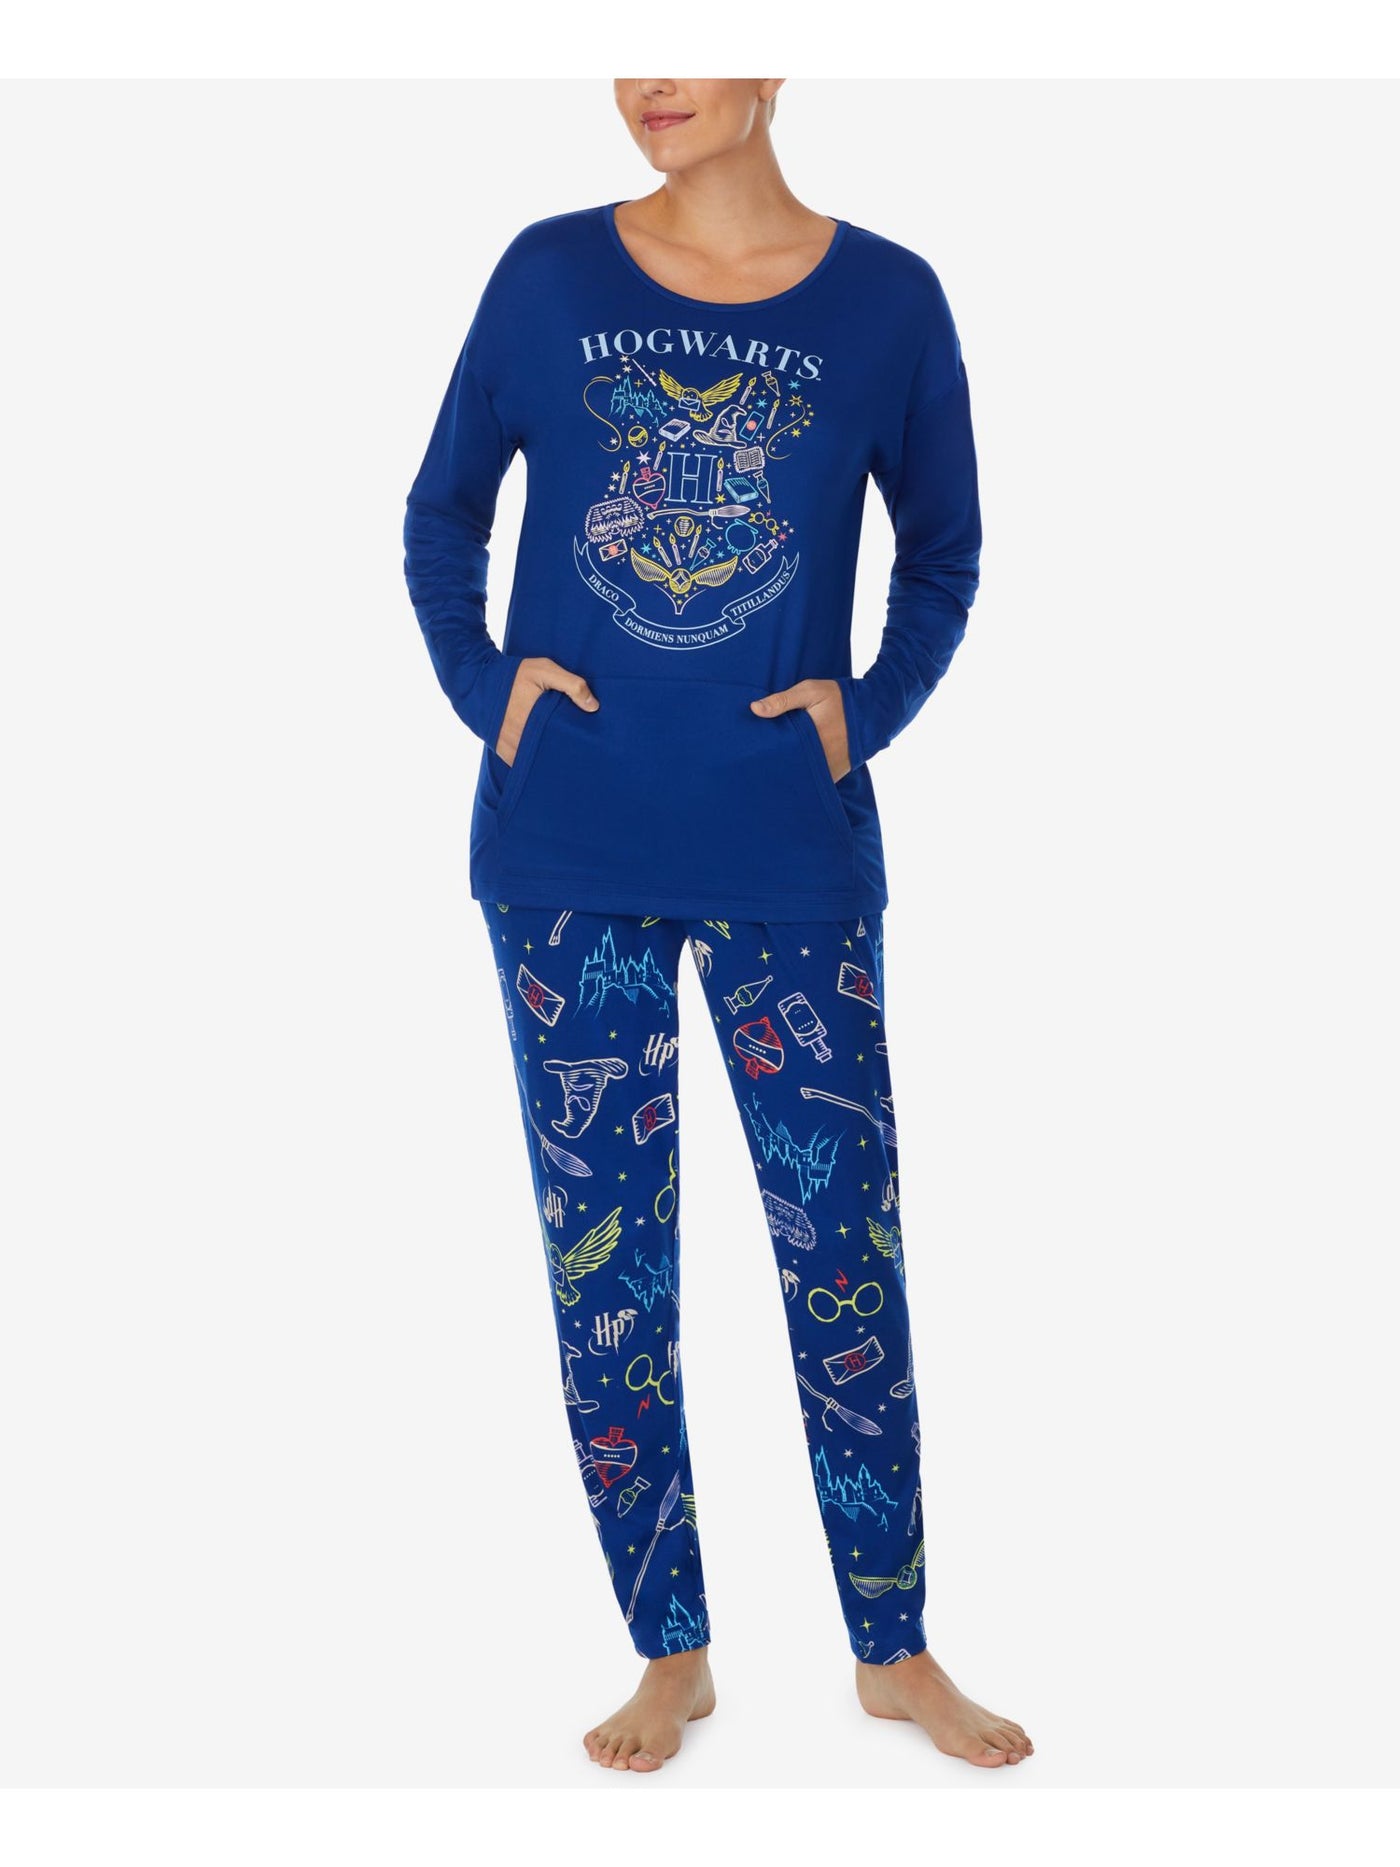 HYBRID APPAREL Womens Blue Graphic Top Elastic Band Skinny Pants Pajamas M